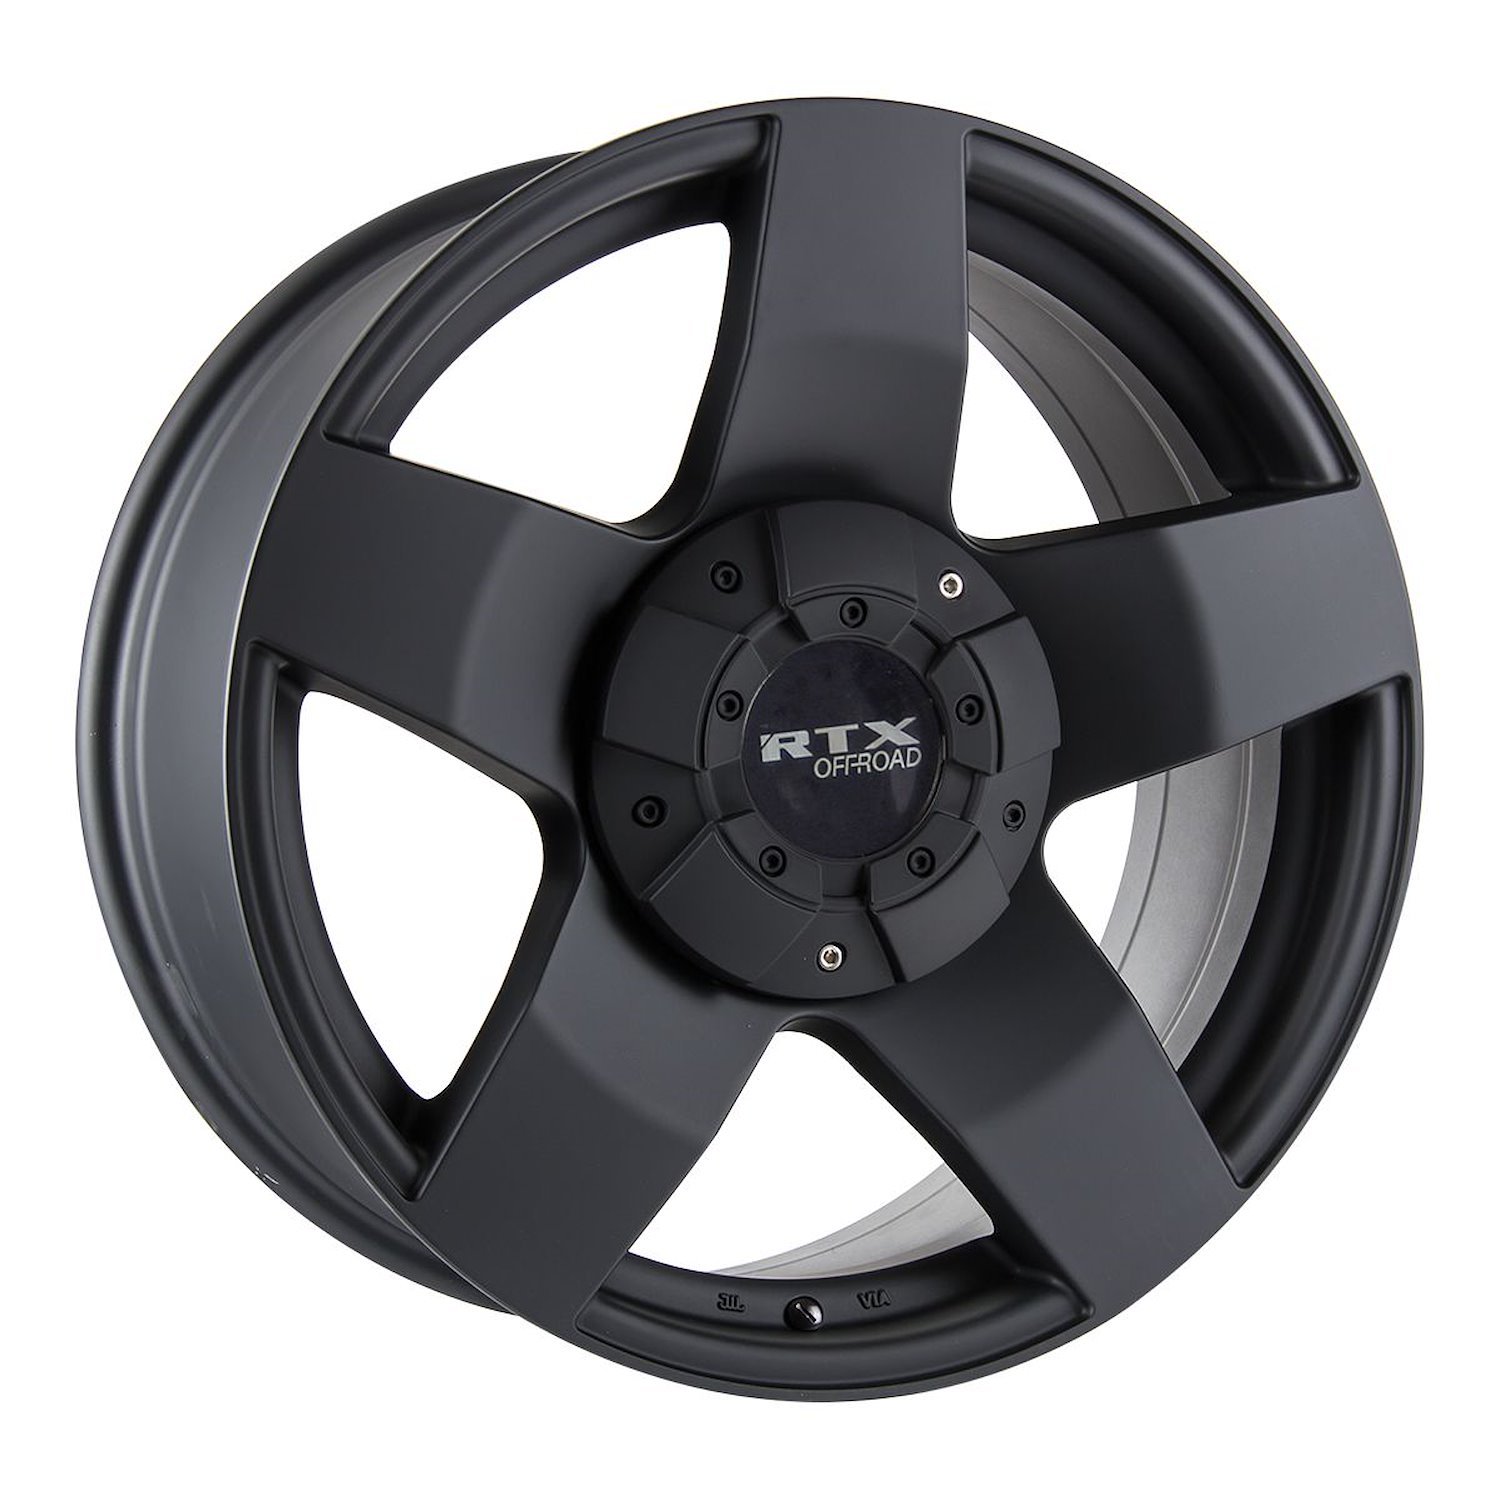 081302 Off-Road Series Thunder Wheel [Size: 18" x 9"] Matte Black Finish